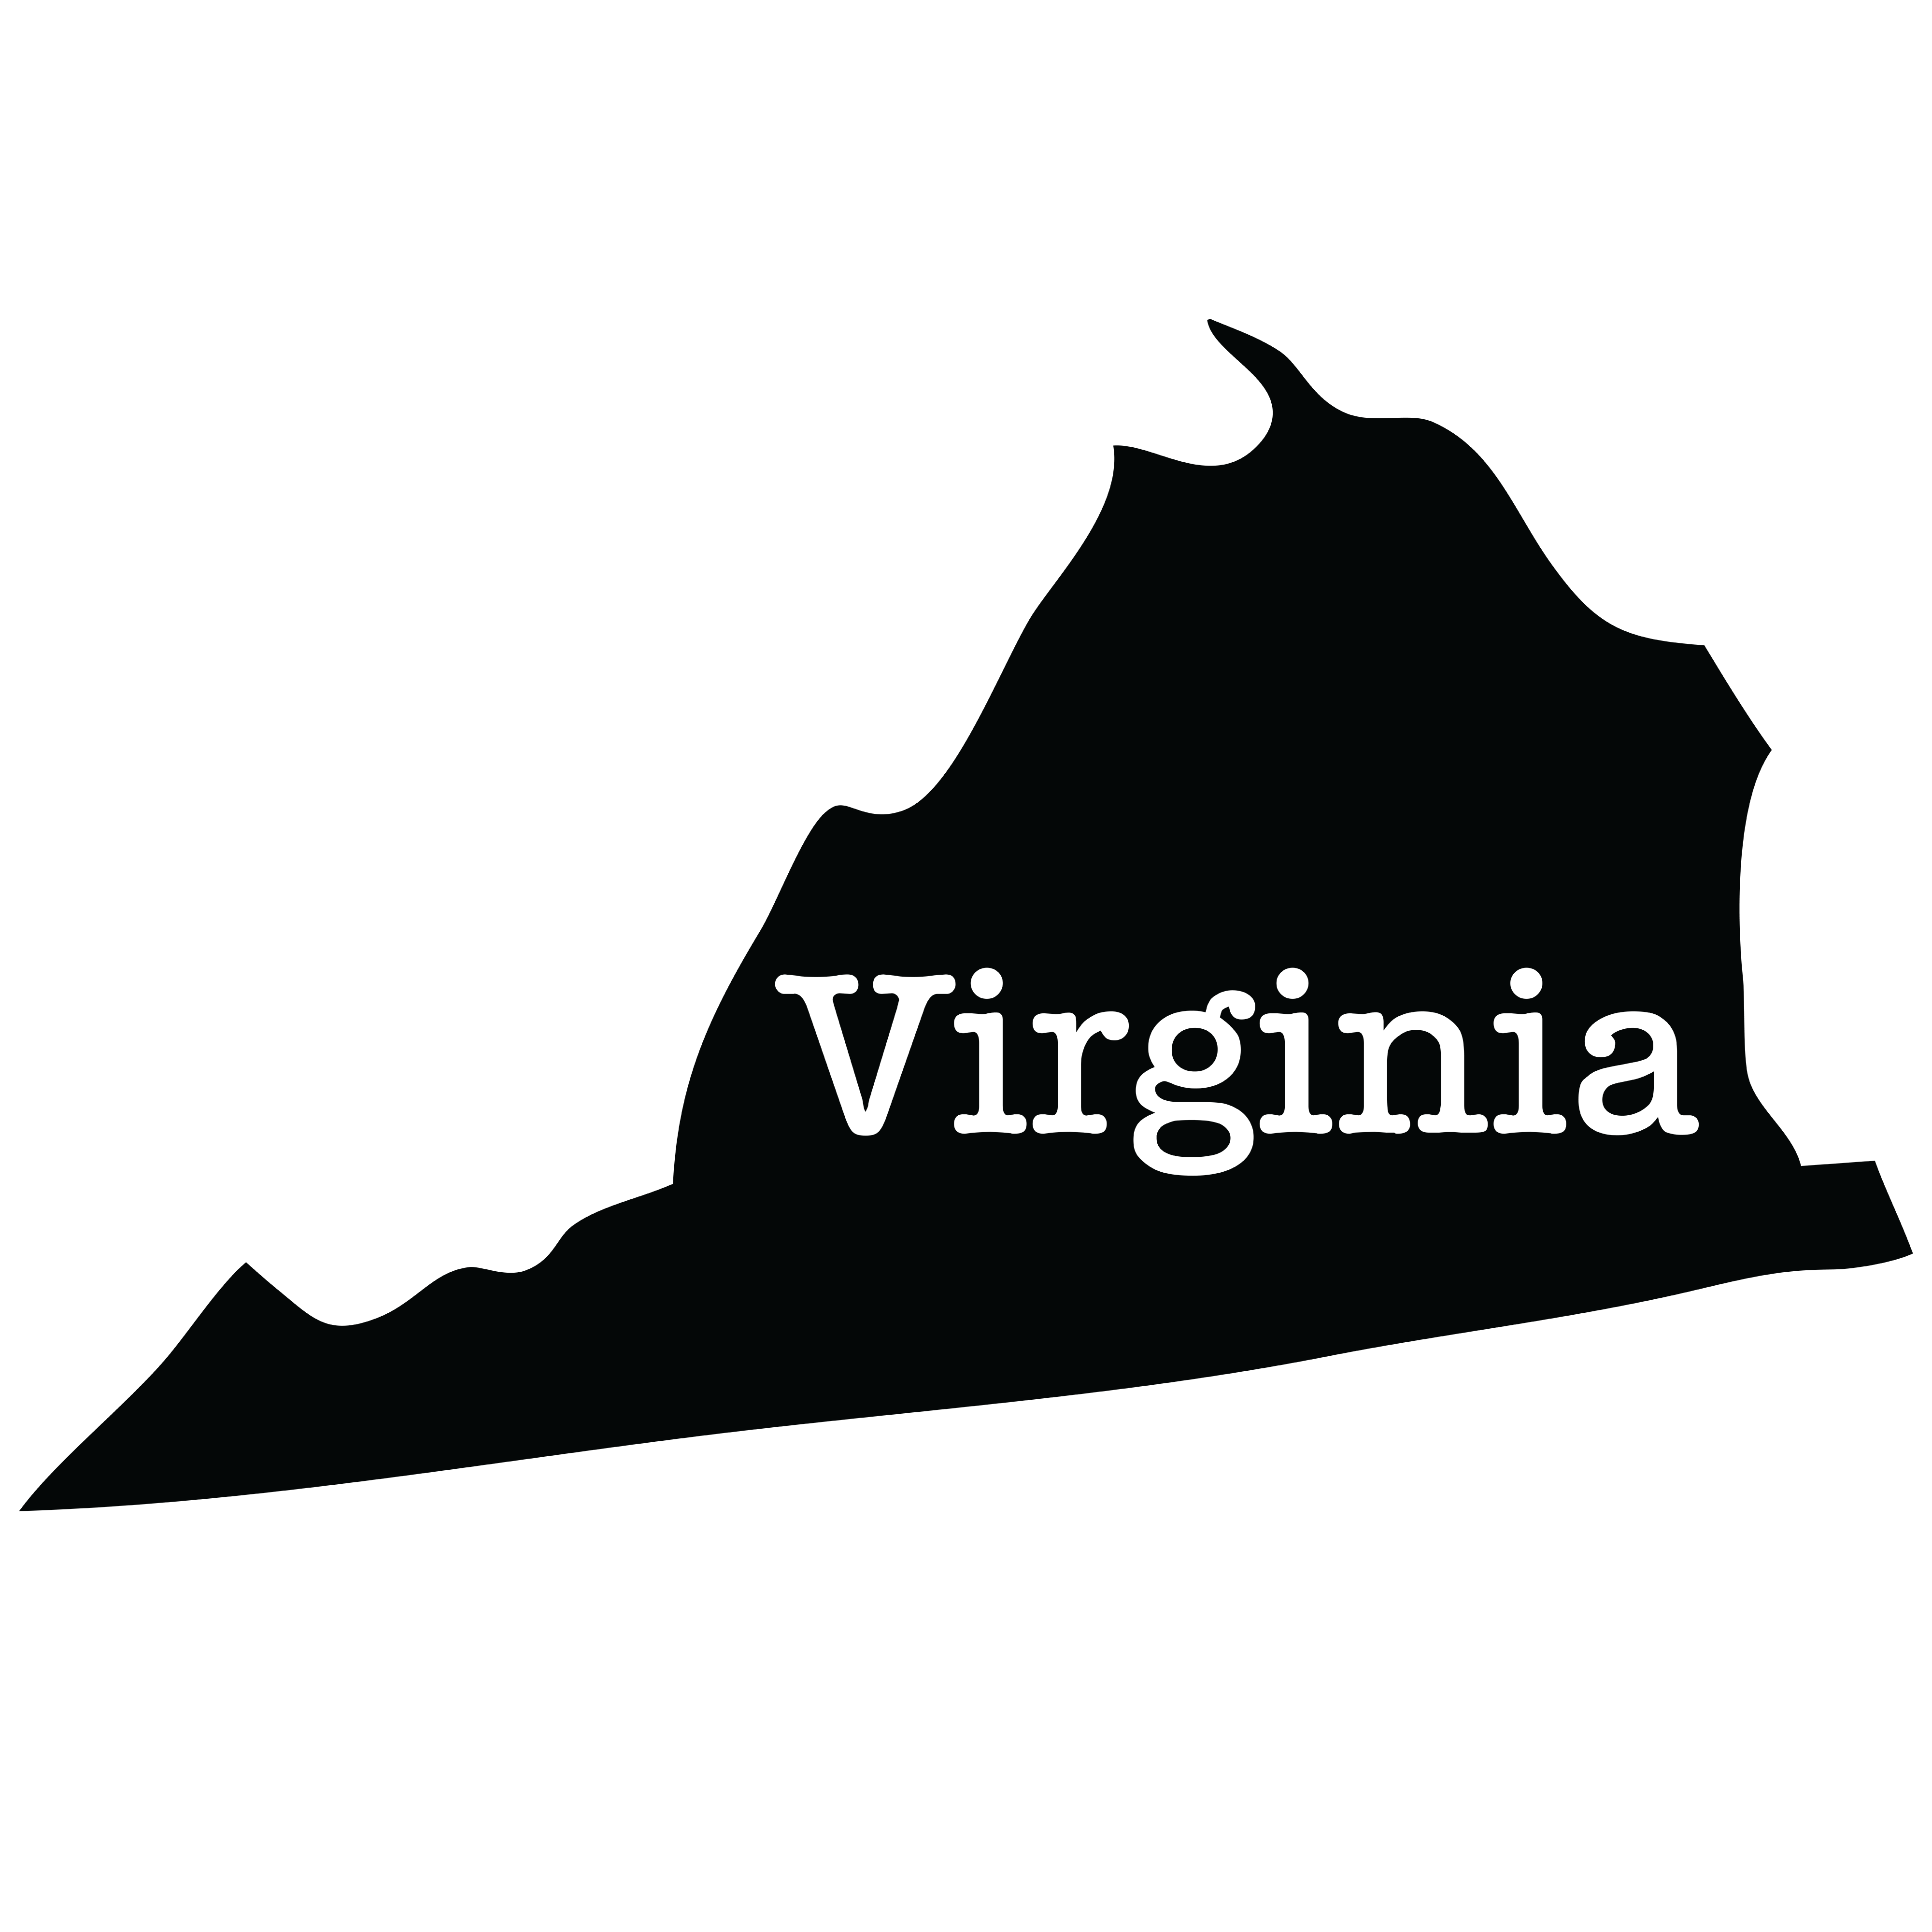 Virginia